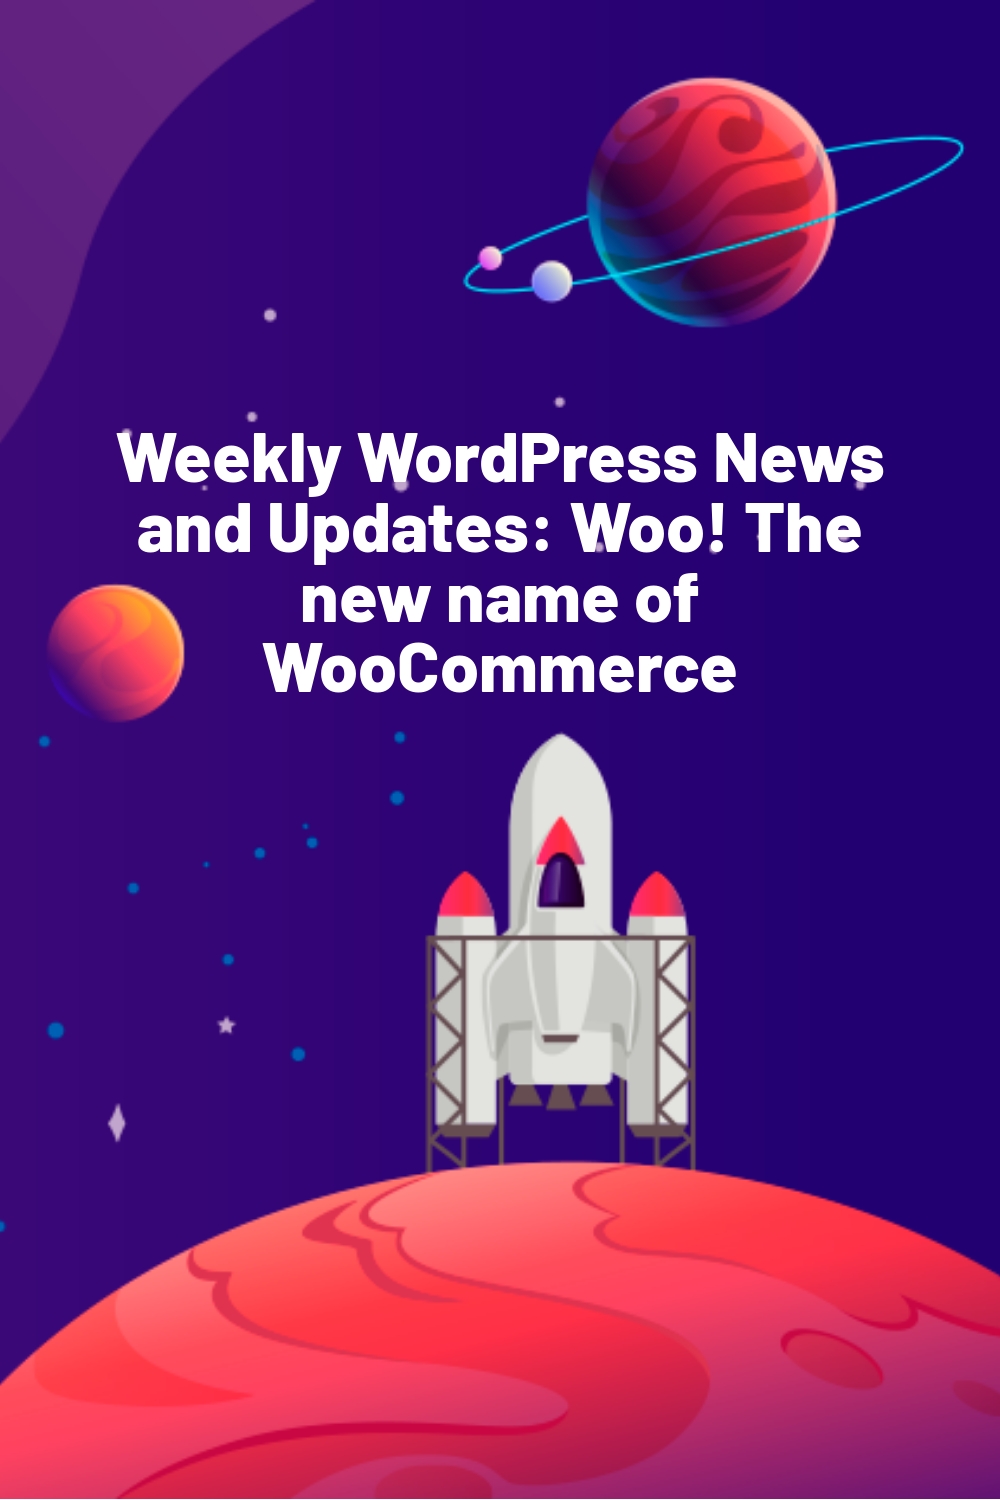 Weekly WordPress News and Updates: Woo! The new name of WooCommerce